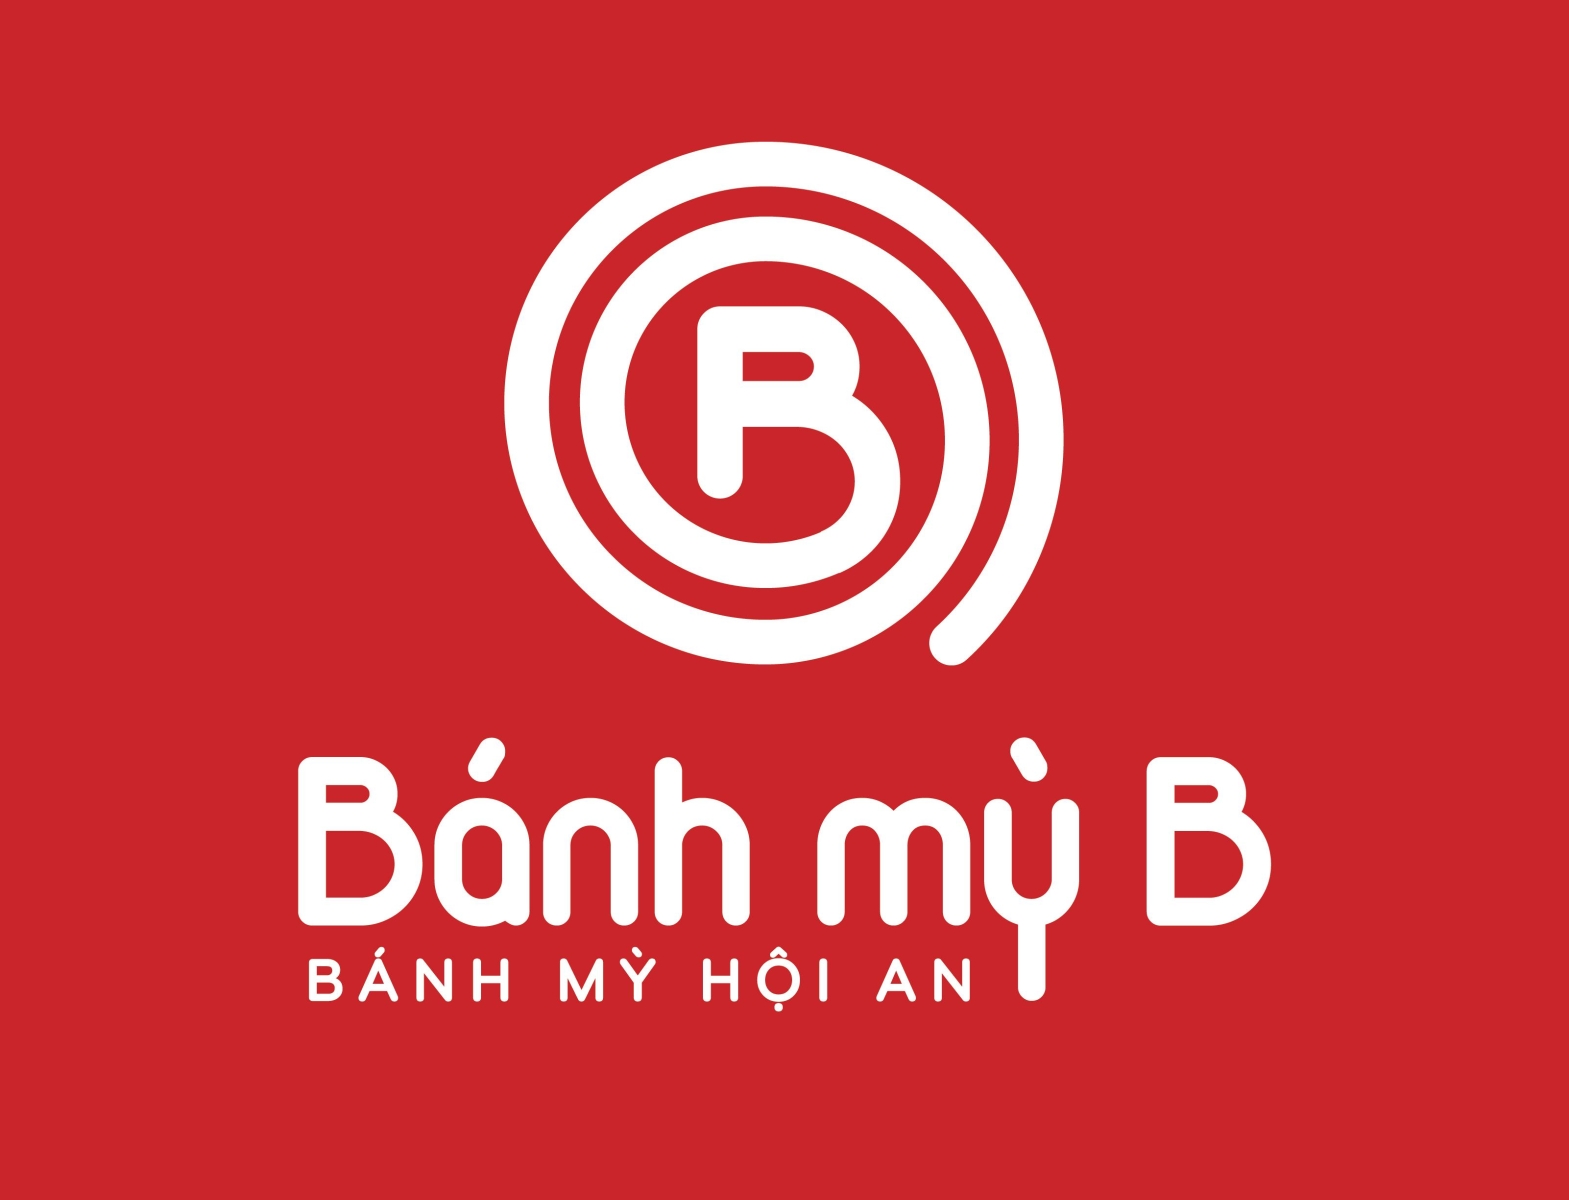 Bánh mỳ B logo by Brandall Agency by Brandall Design Agency on Dribbble